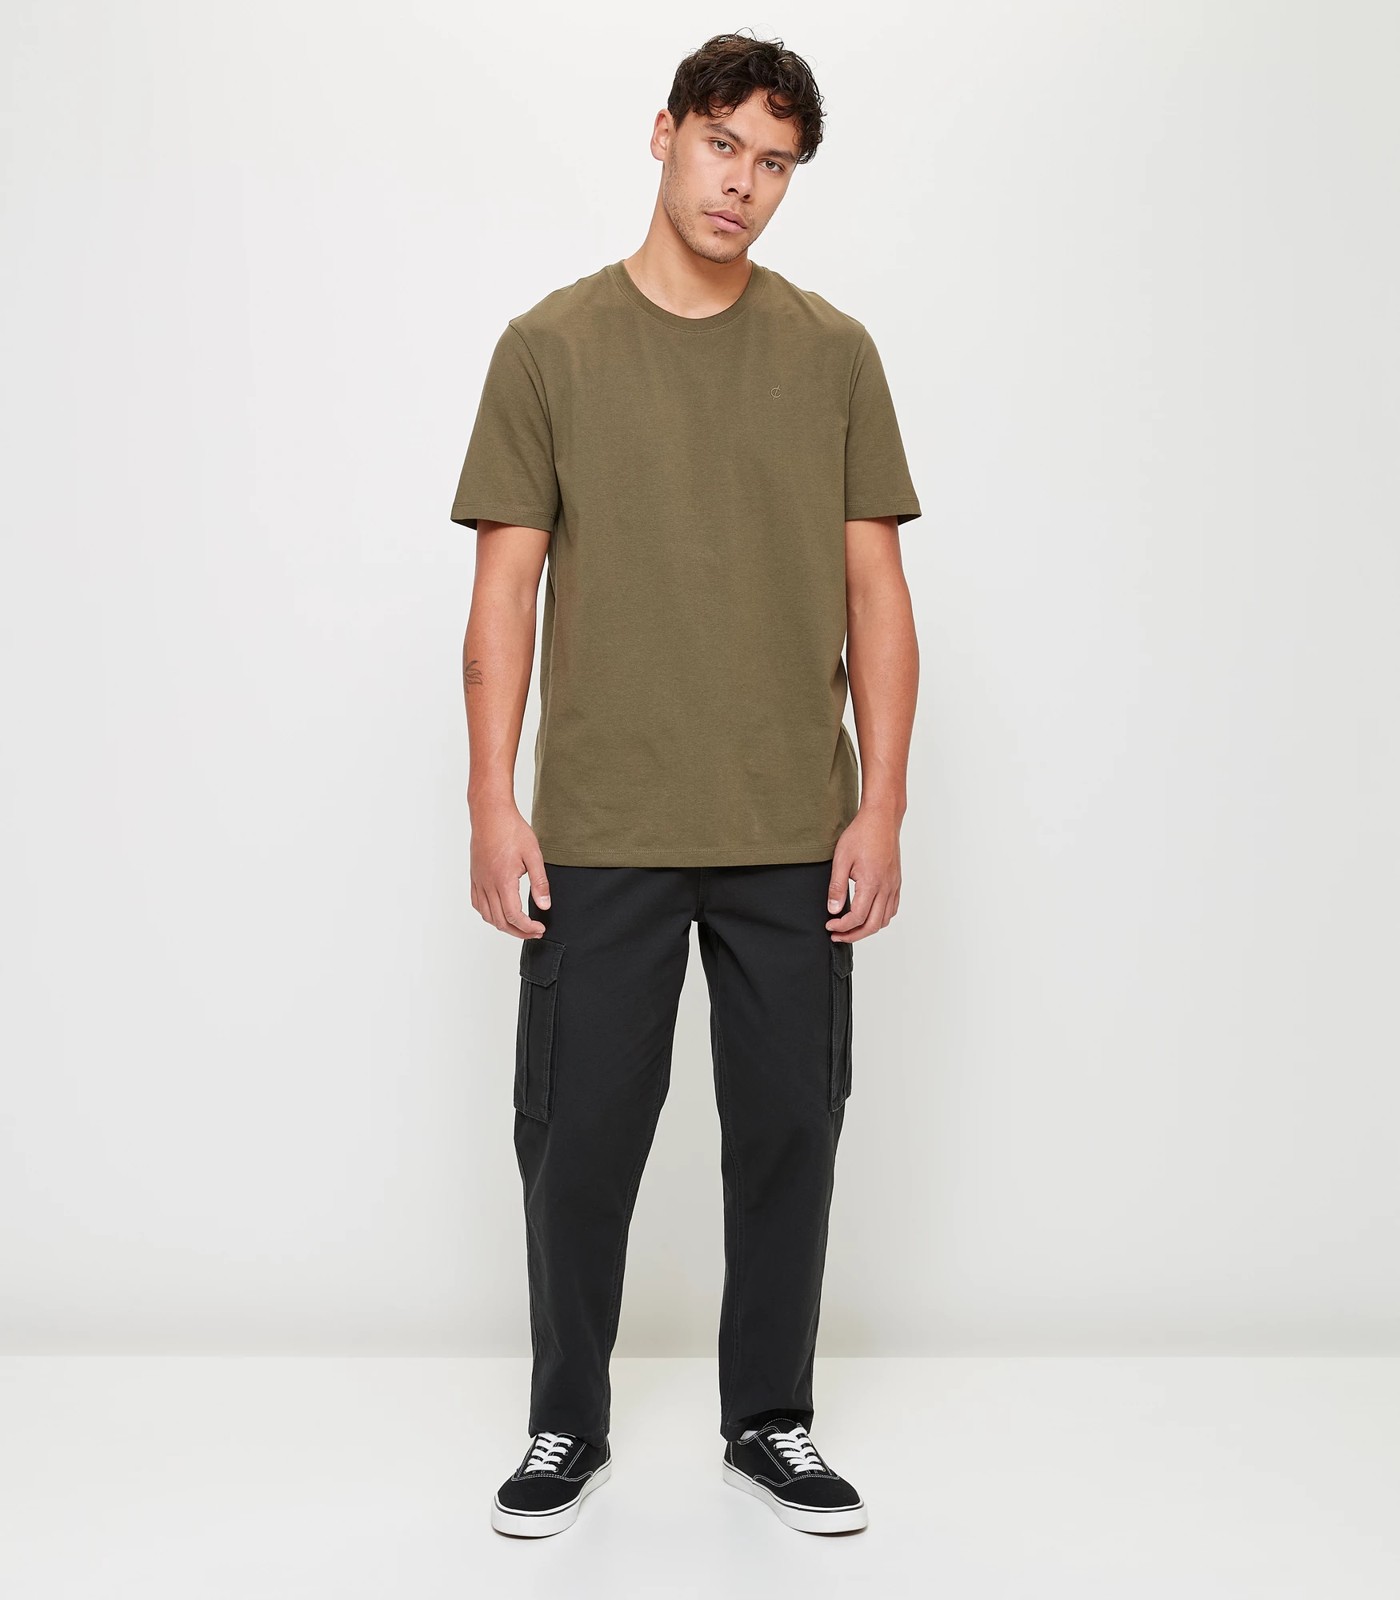 Commons Core T-Shirt - Ivy Green | Target Australia